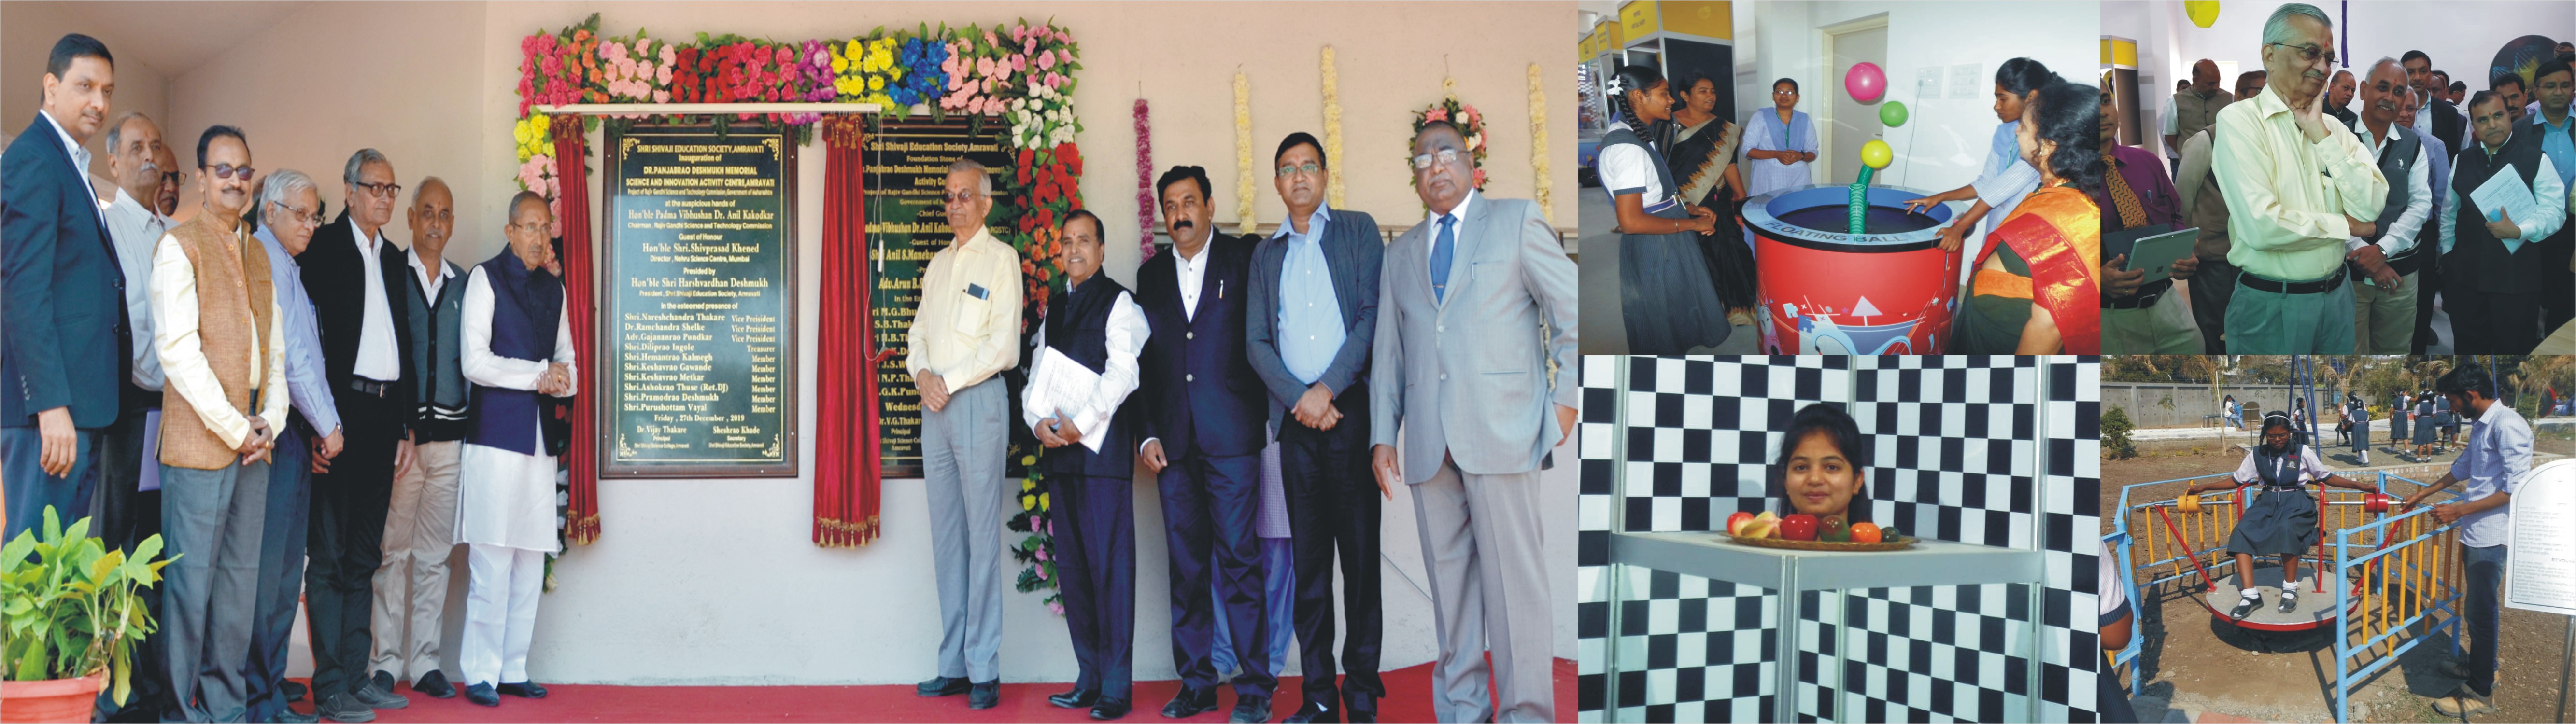 Padma Vibhushan Dr Kakodkar Inaugurating Science and Innovation Activity Centre 